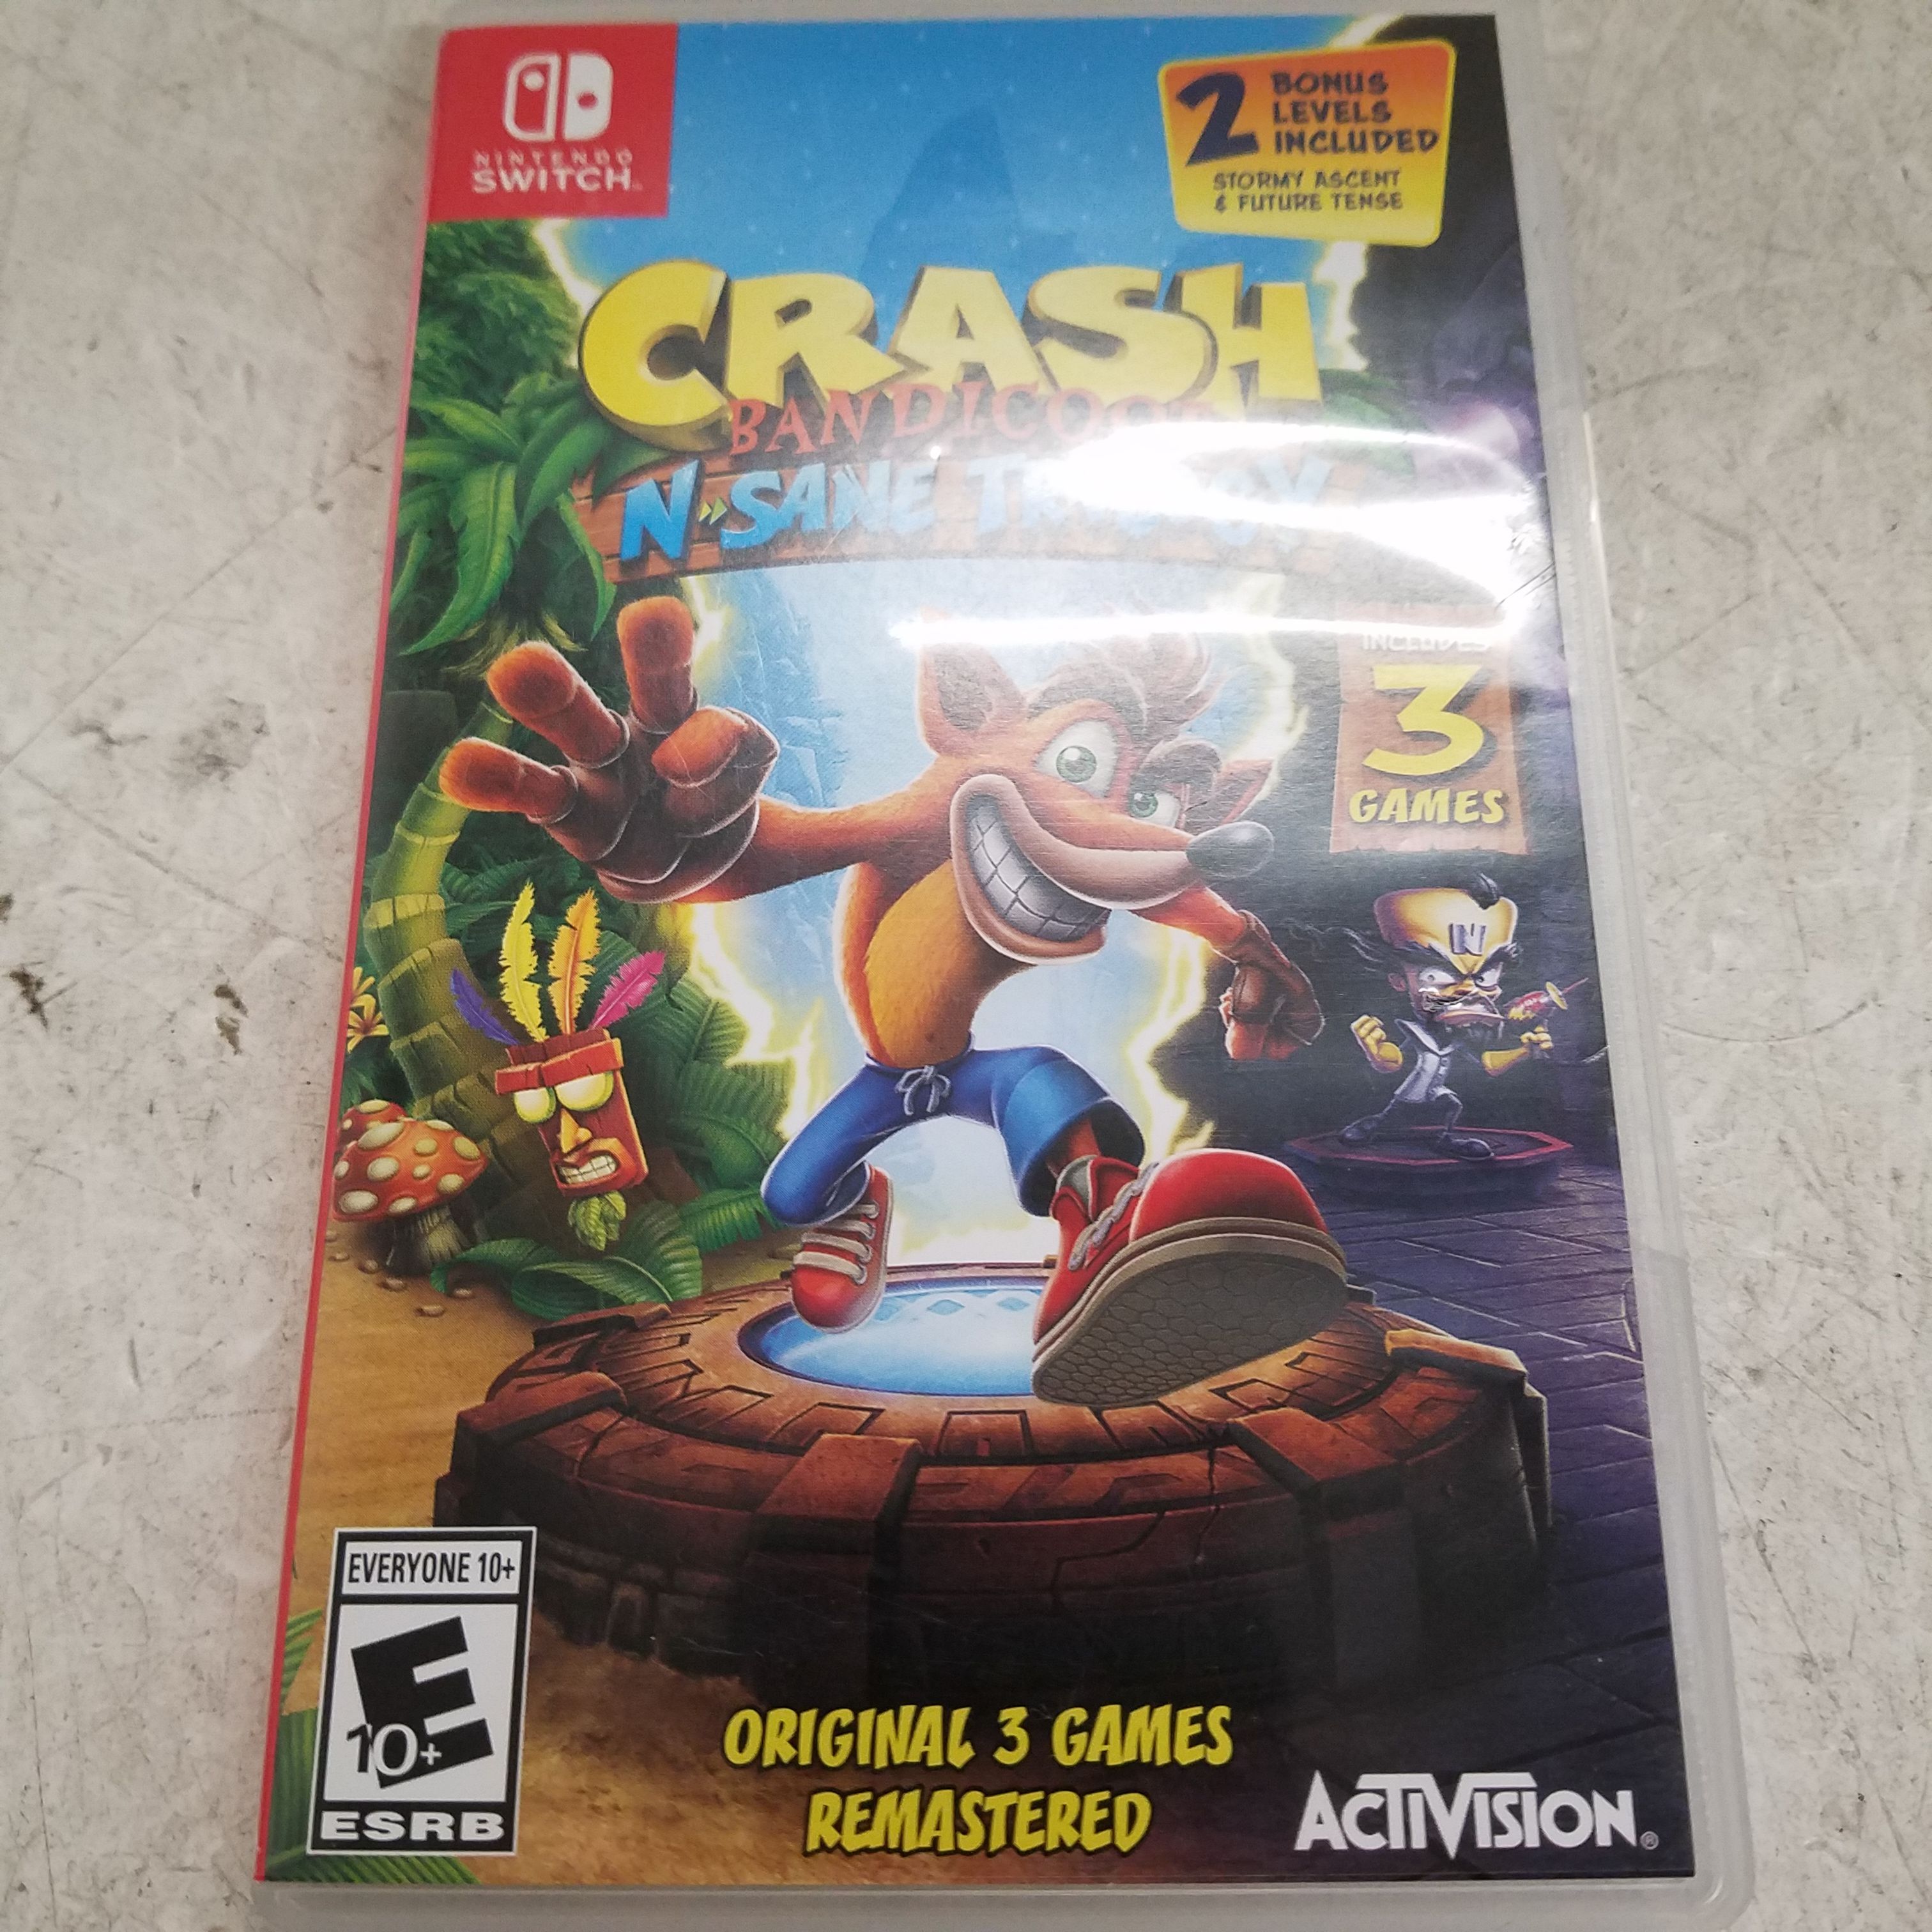  Crash Bandicoot N. Sane Trilogy - Nintendo Switch Standard  Edition : Activision Inc: Video Games